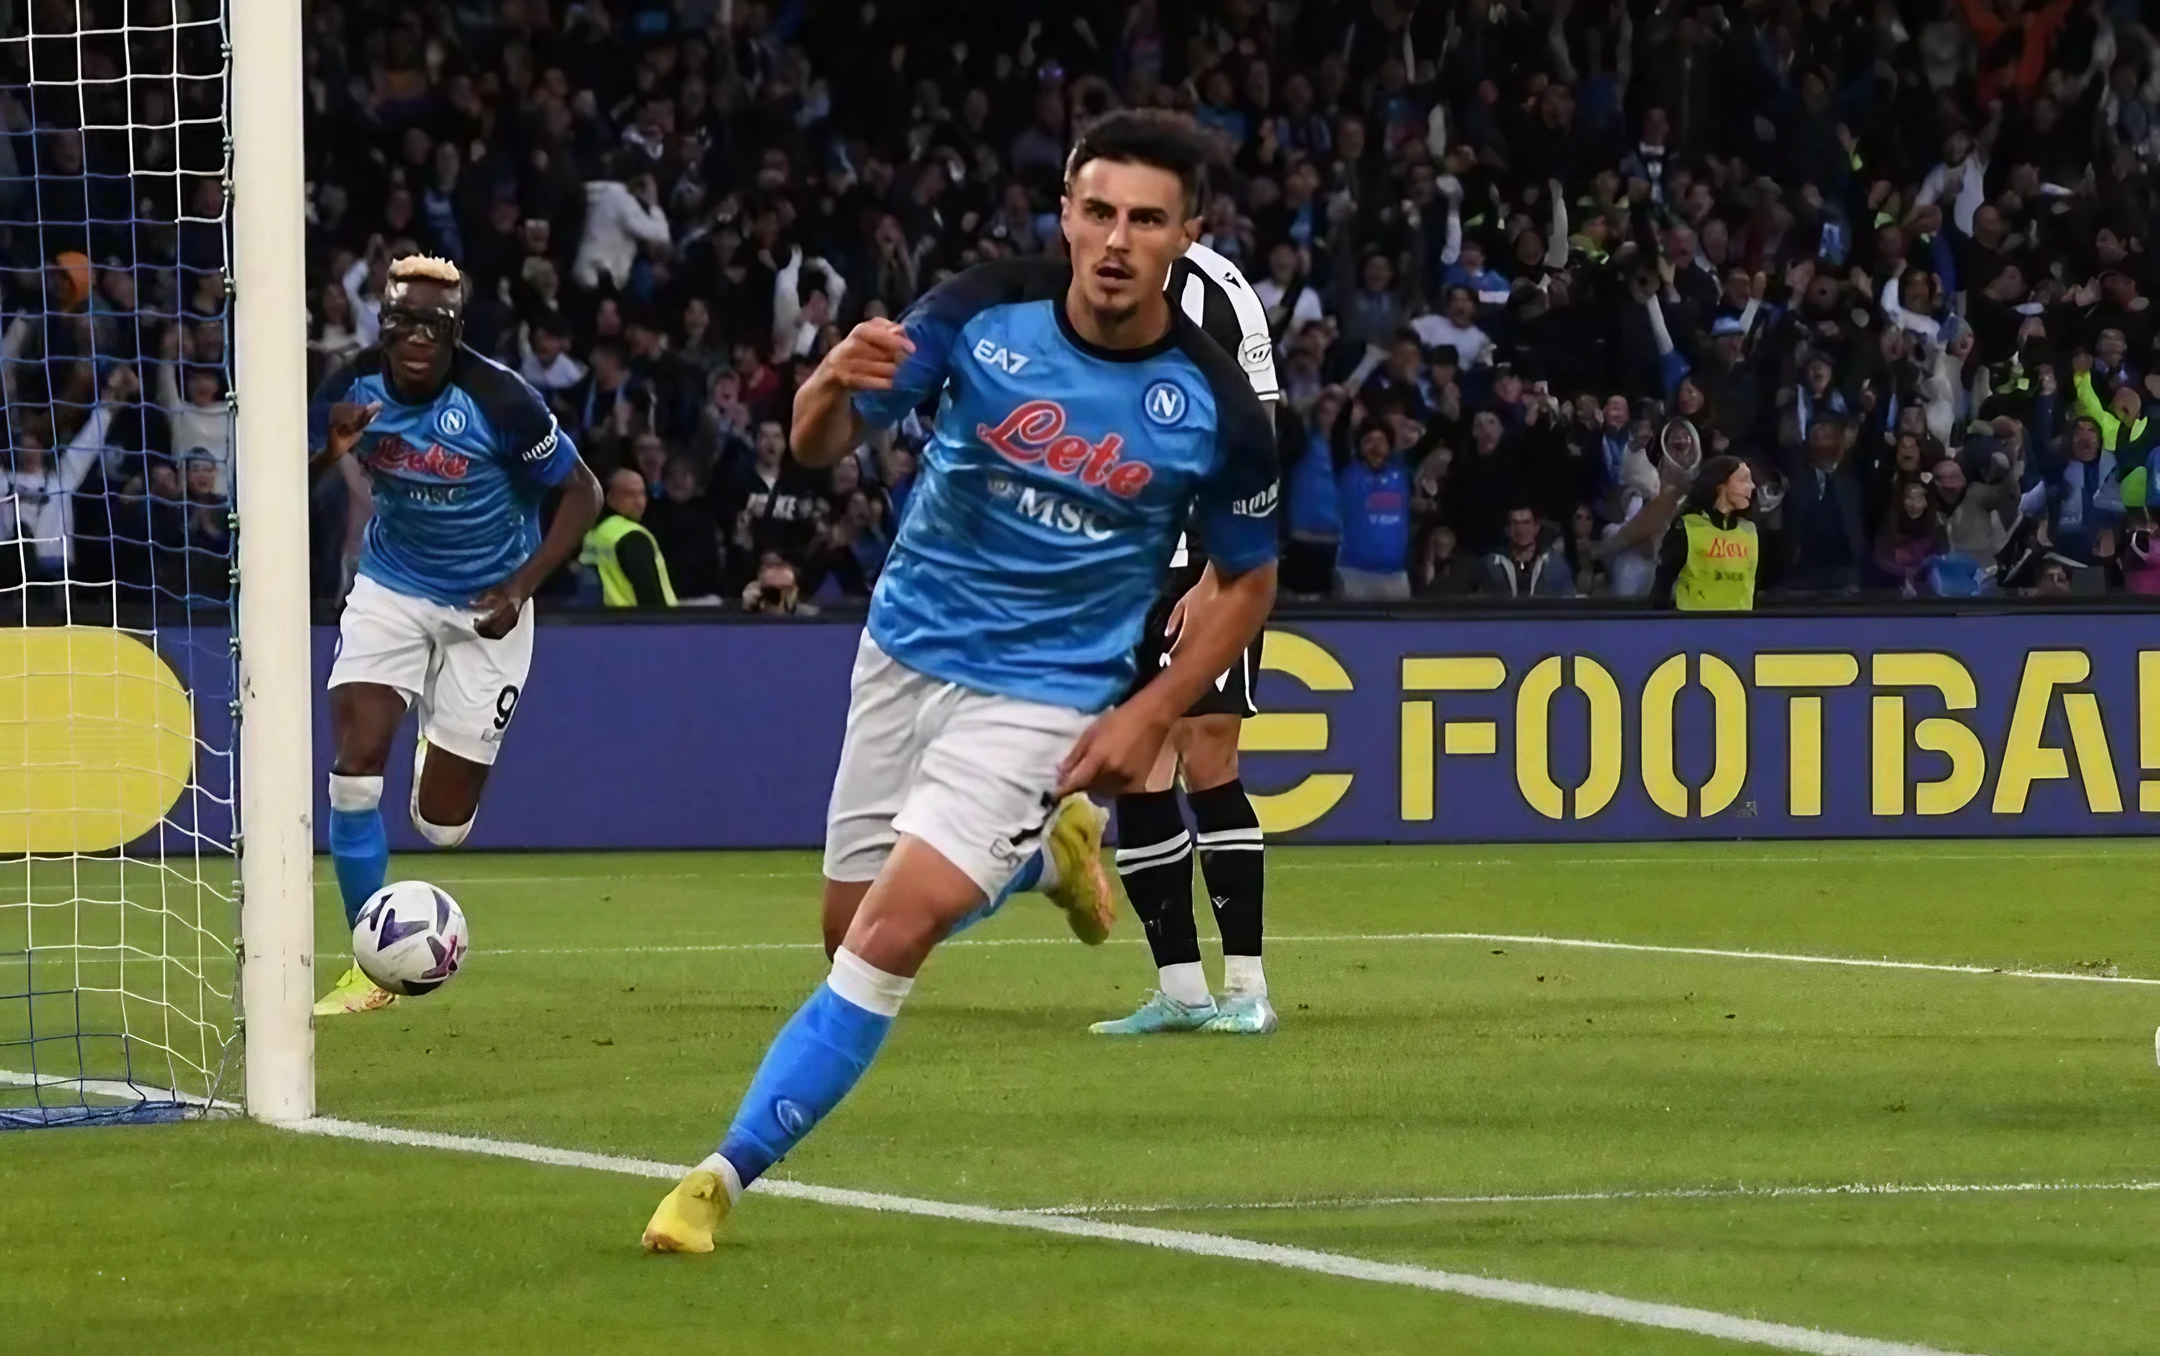 Elmas, Fußballer des SSC Napoli, kickt den Ball ins Netz und geht weg, um zu jubeln